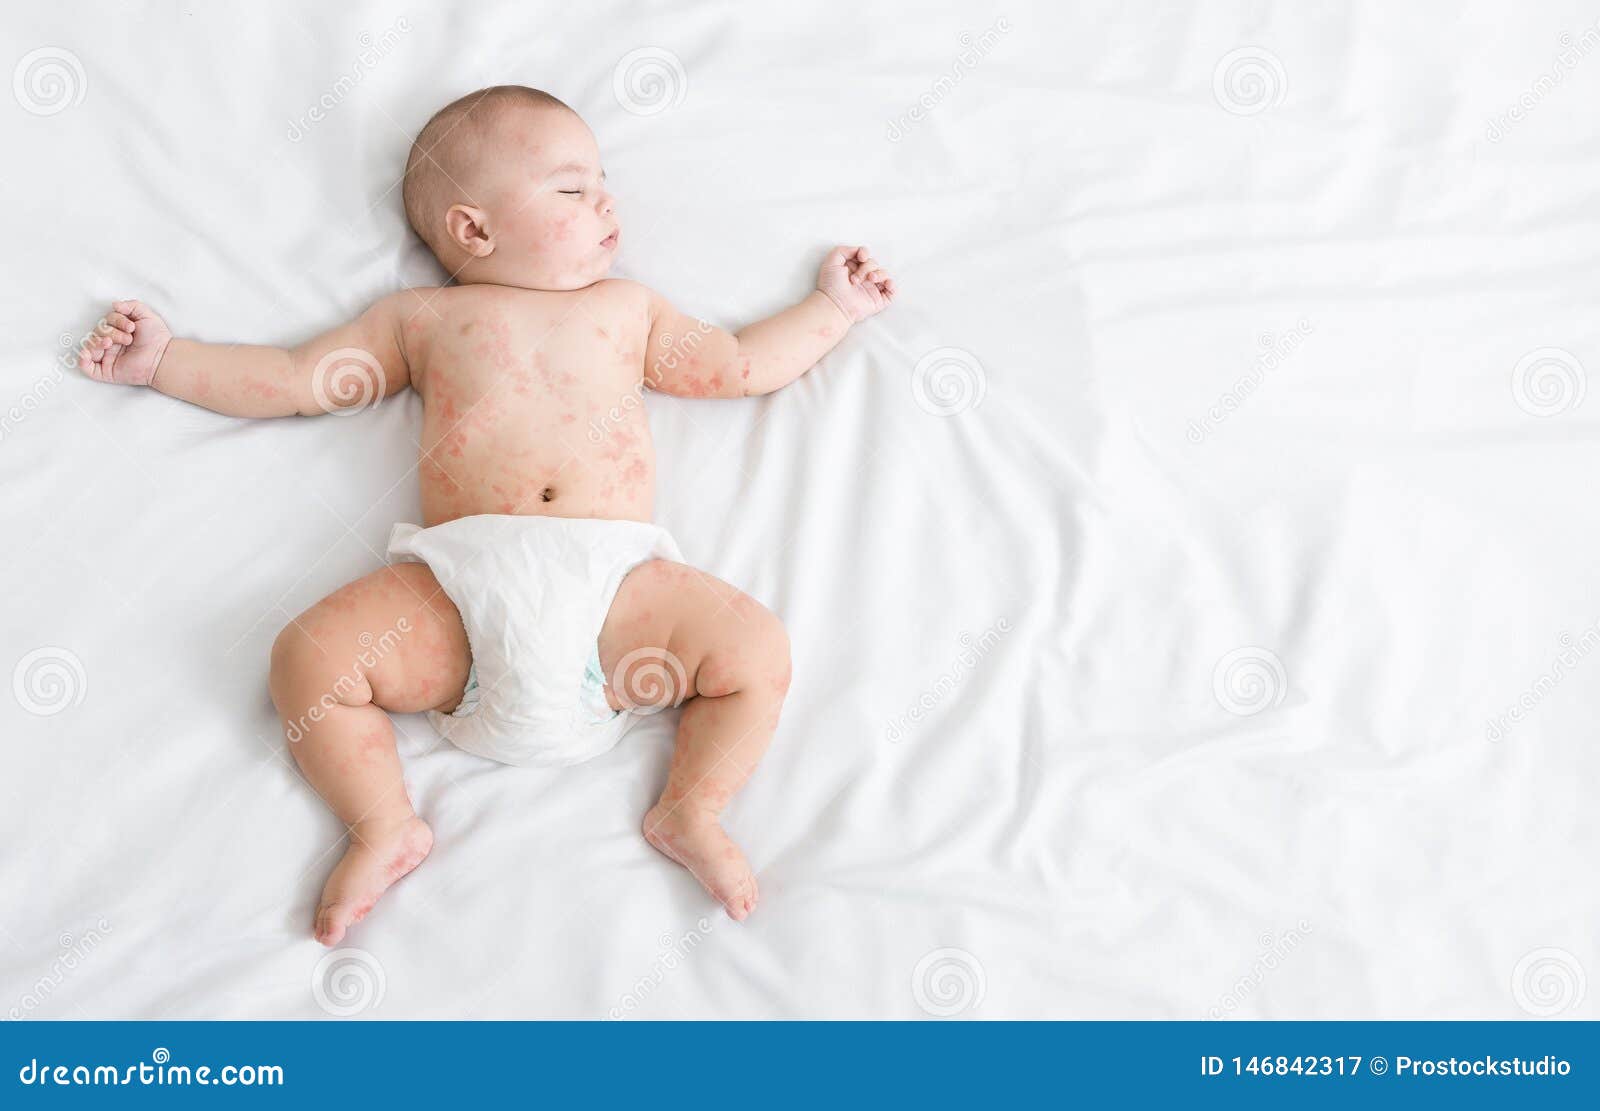 newborn baby with measles rash sleeping on bed